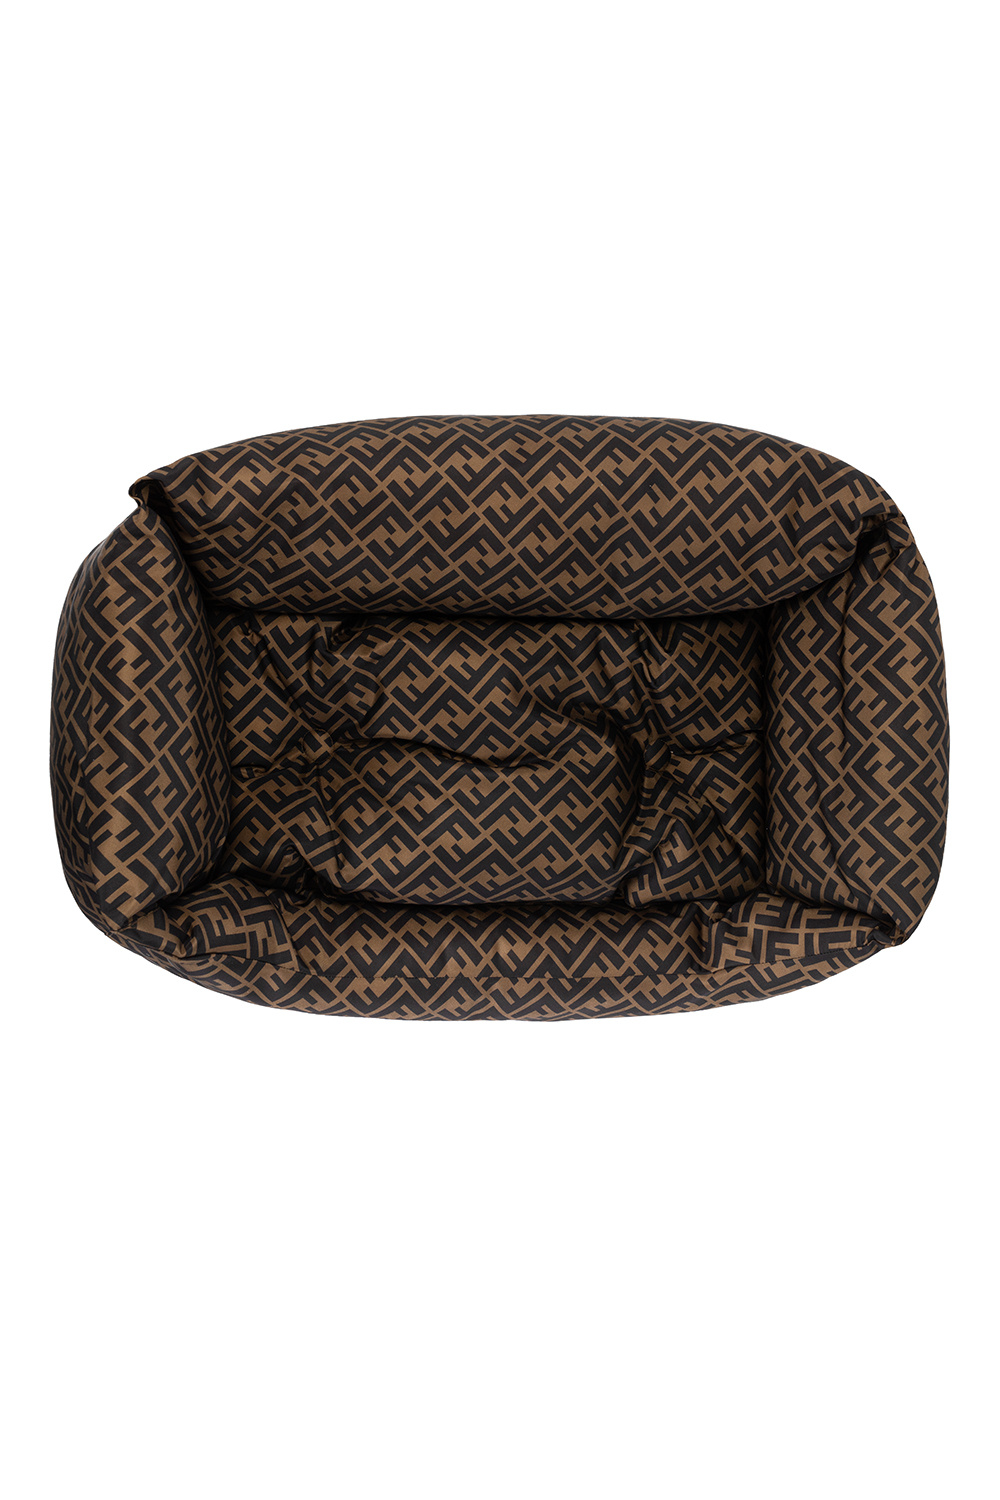 Fendi fendi baguette handbag in black canvas and black lizzard